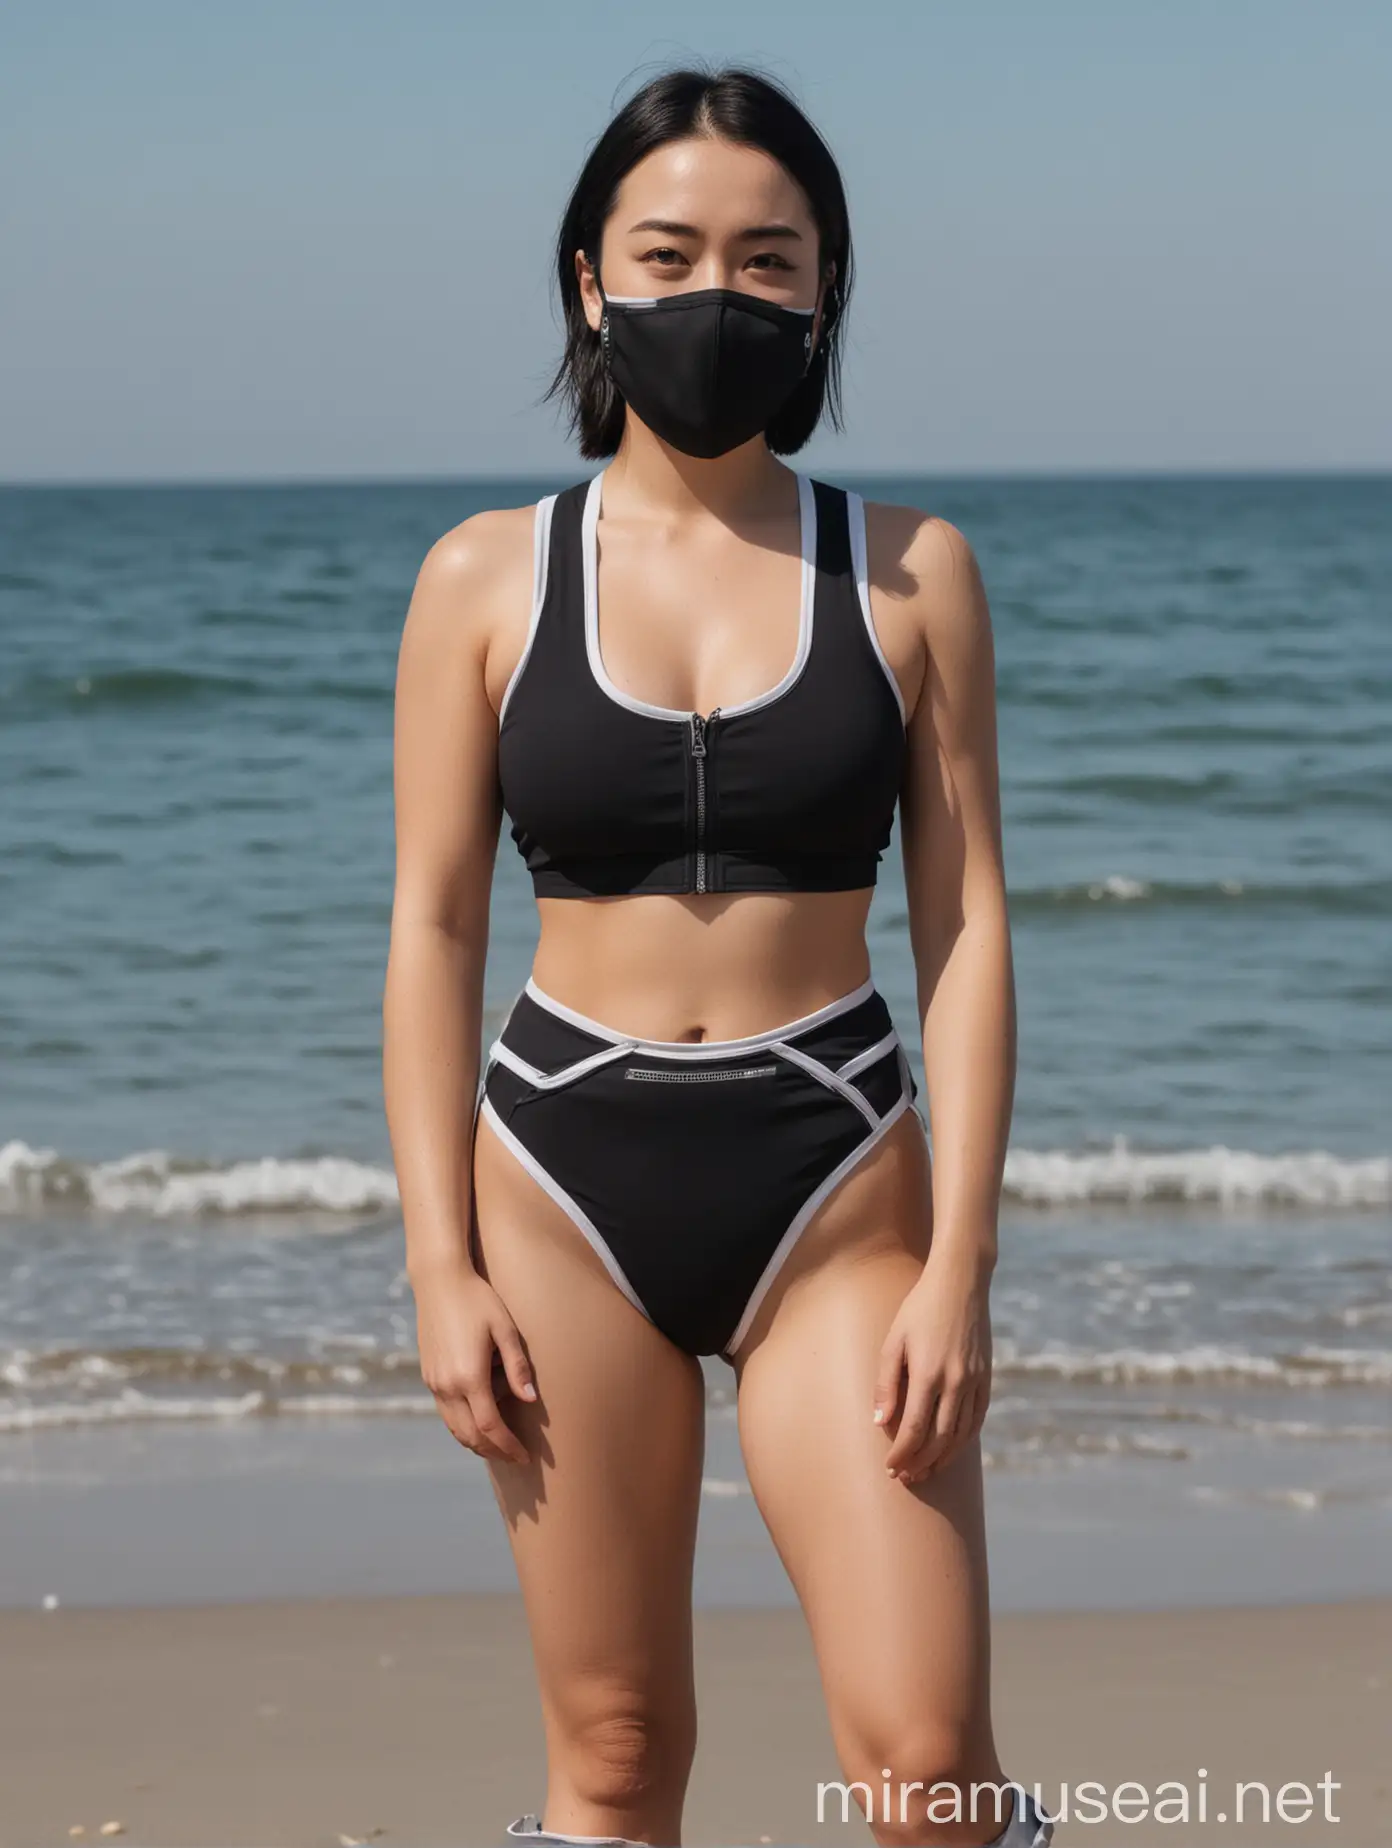 Mitski Beach Portrait with Respirator Mask and Stylish Swimwear